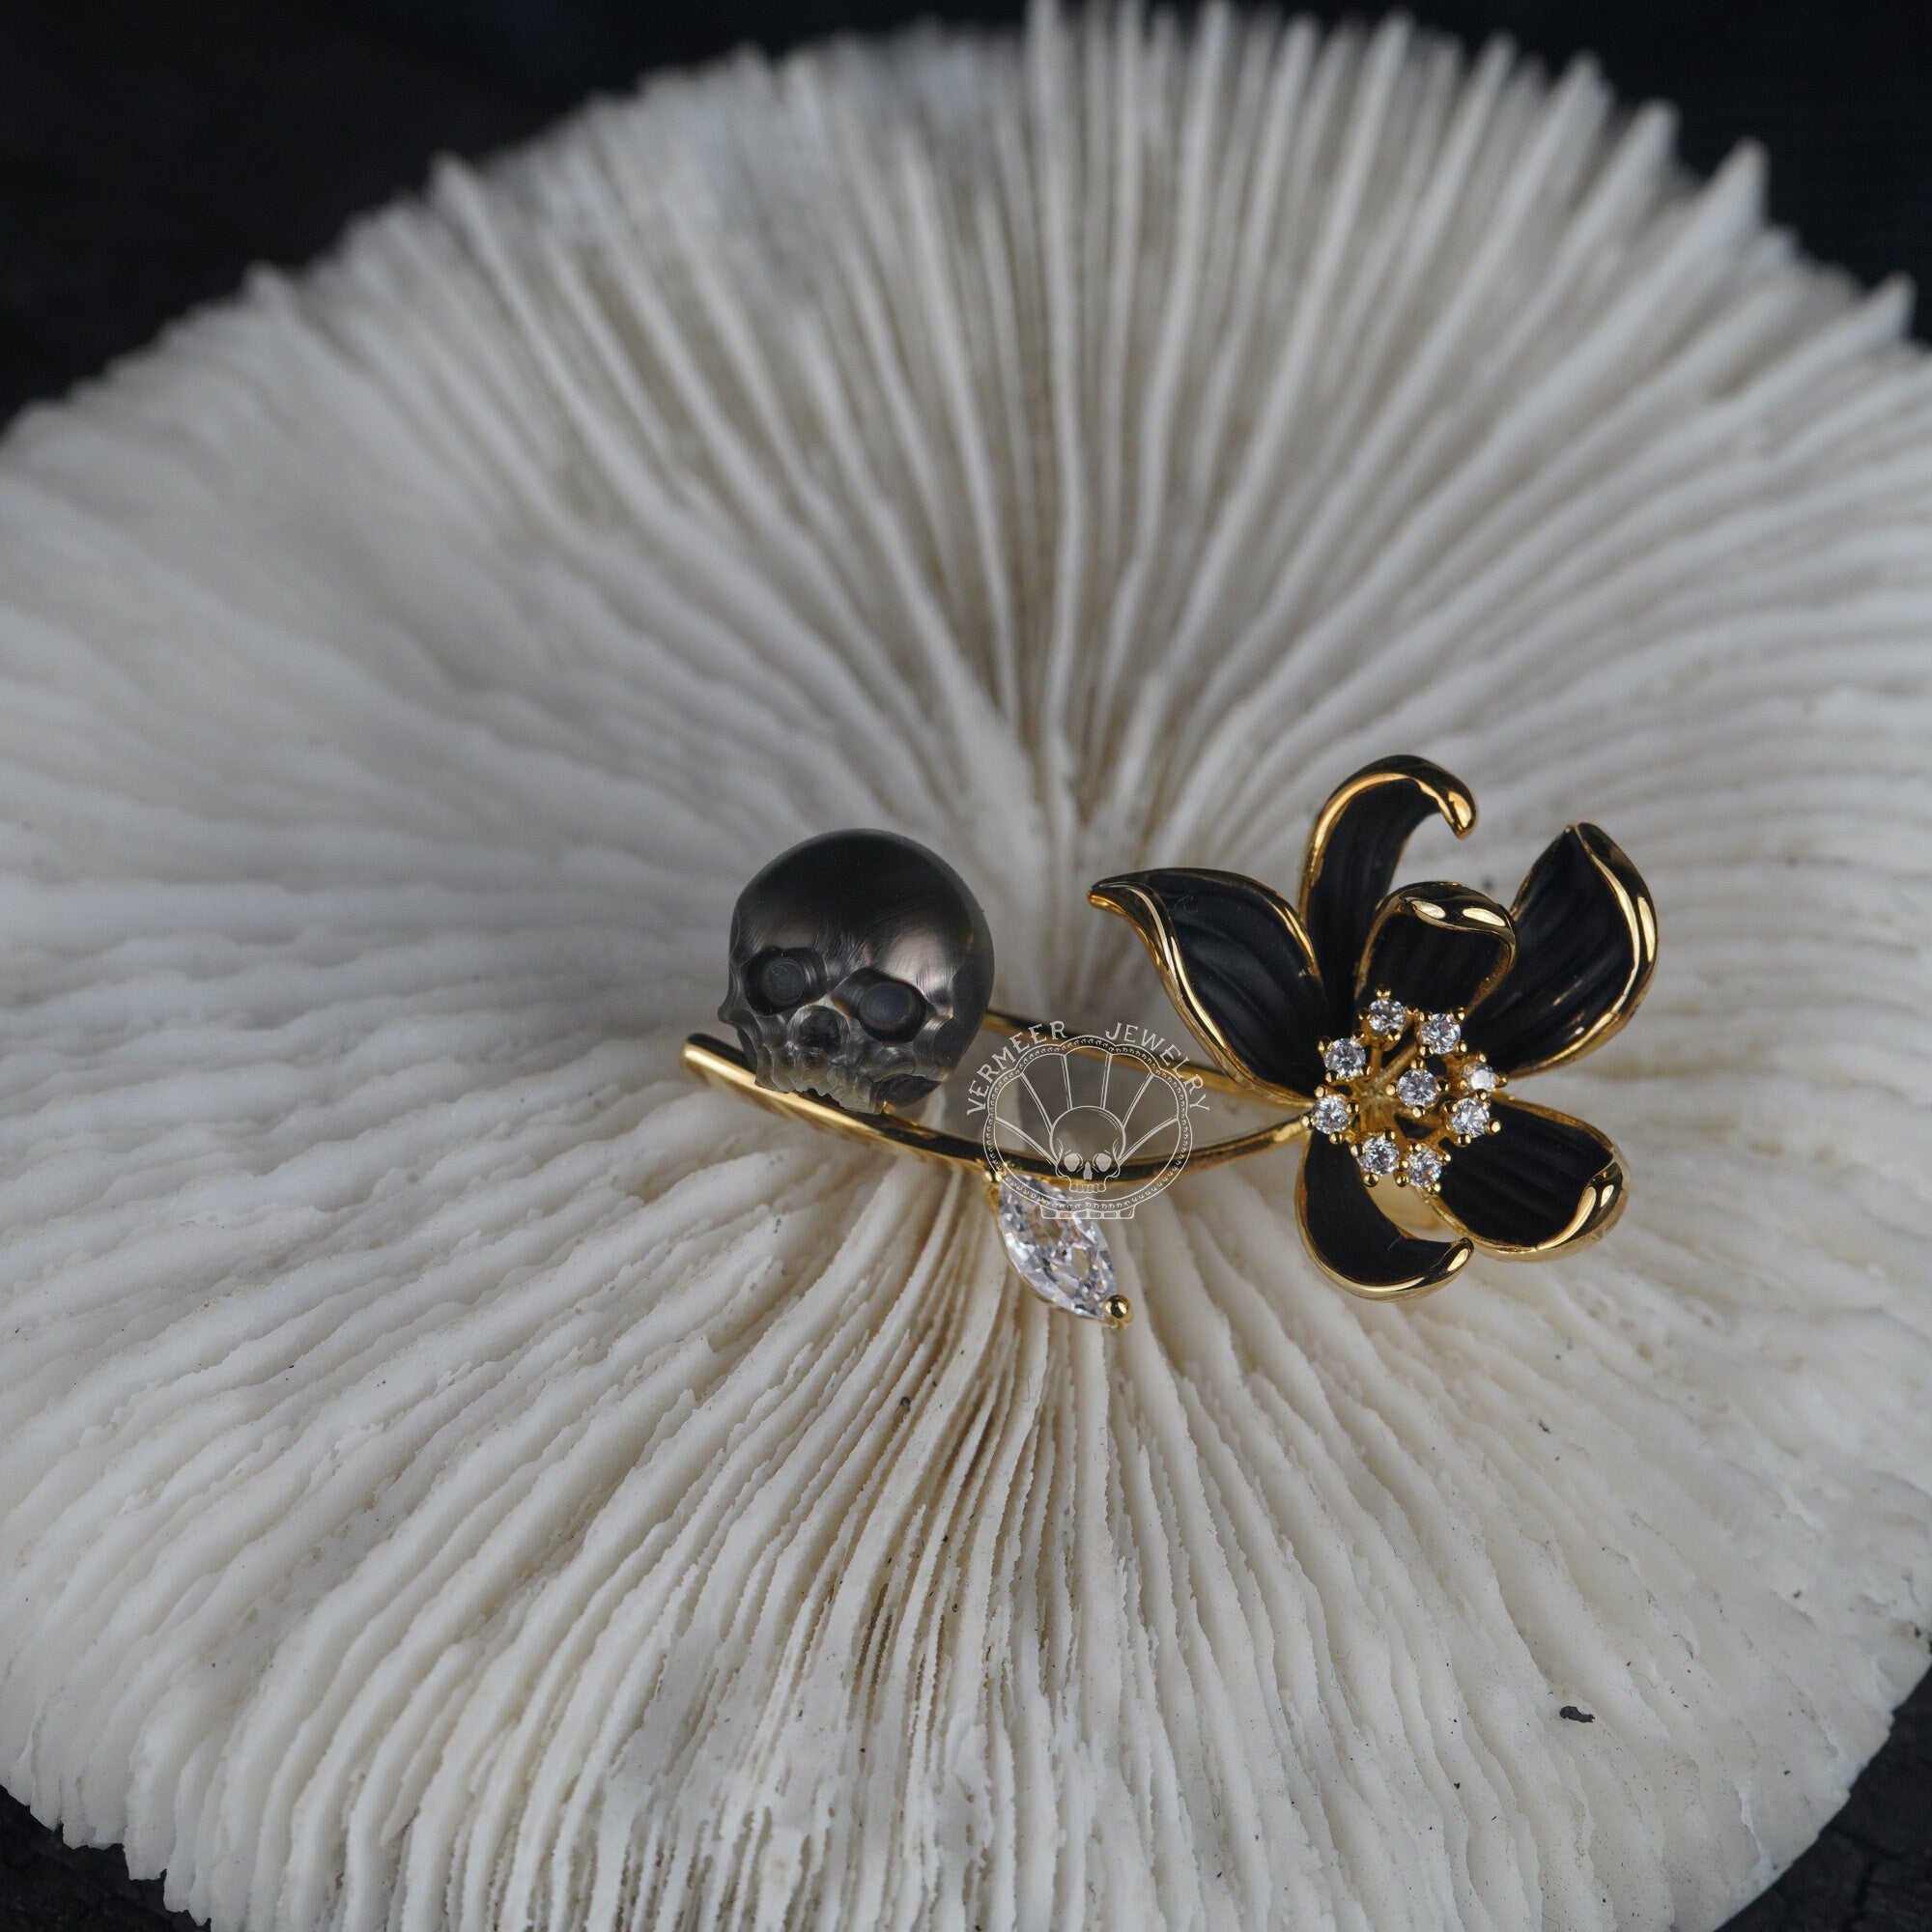 skull carved pearl brooch handmade black tahiti hand carved skull brooch gothic jewelry for wedding